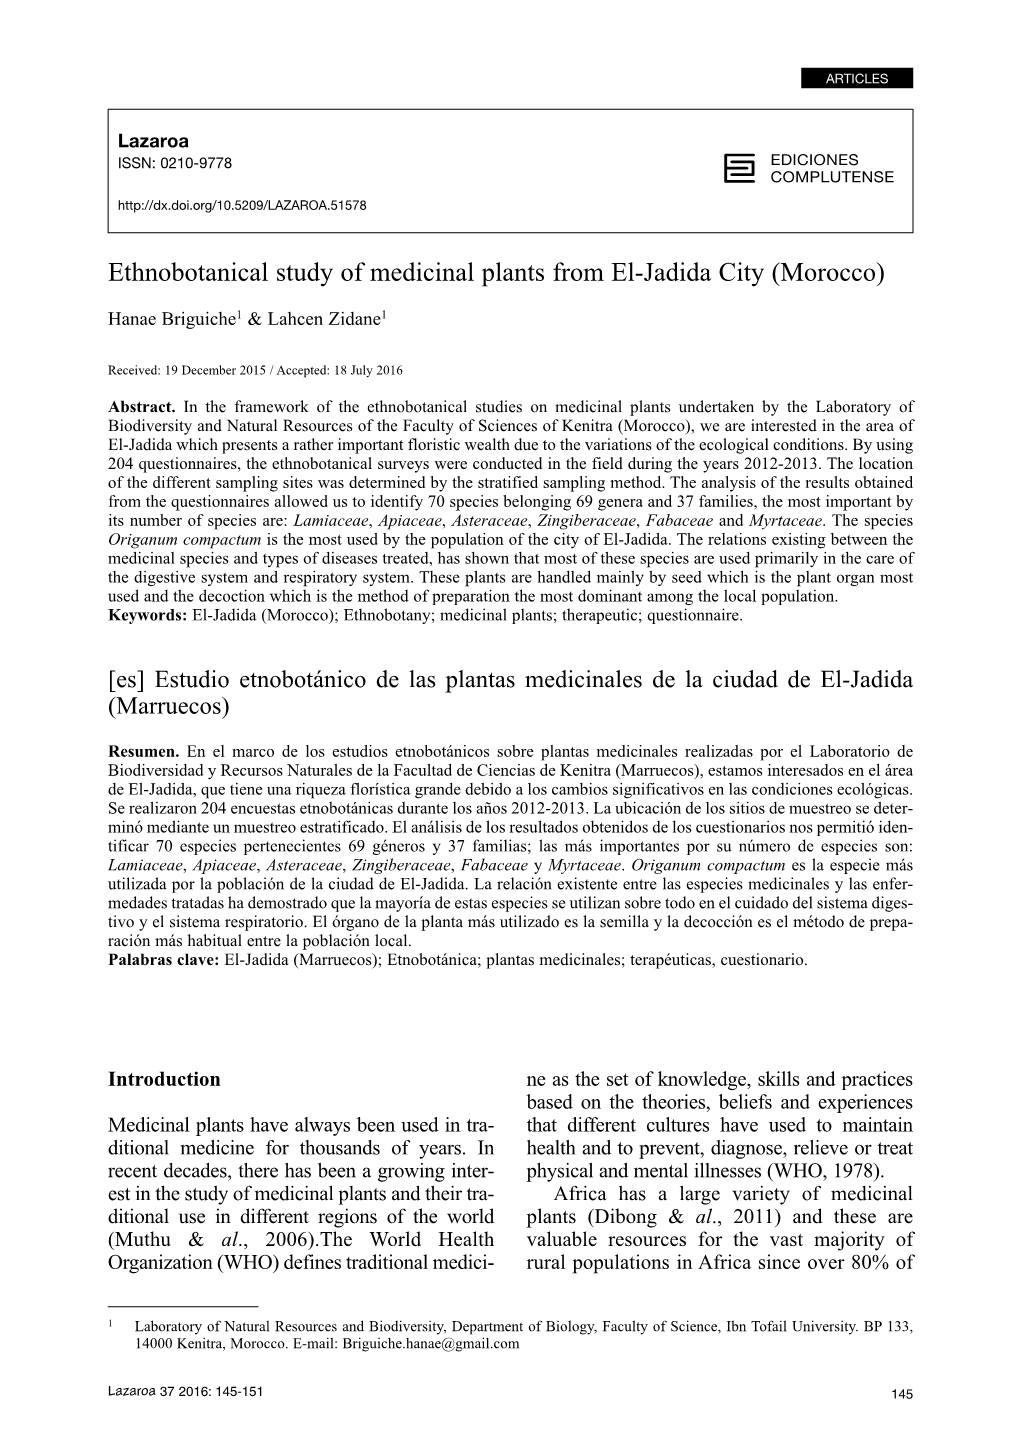 Ethnobotanical Study of Medicinal Plants from El-Jadida City (Morocco)